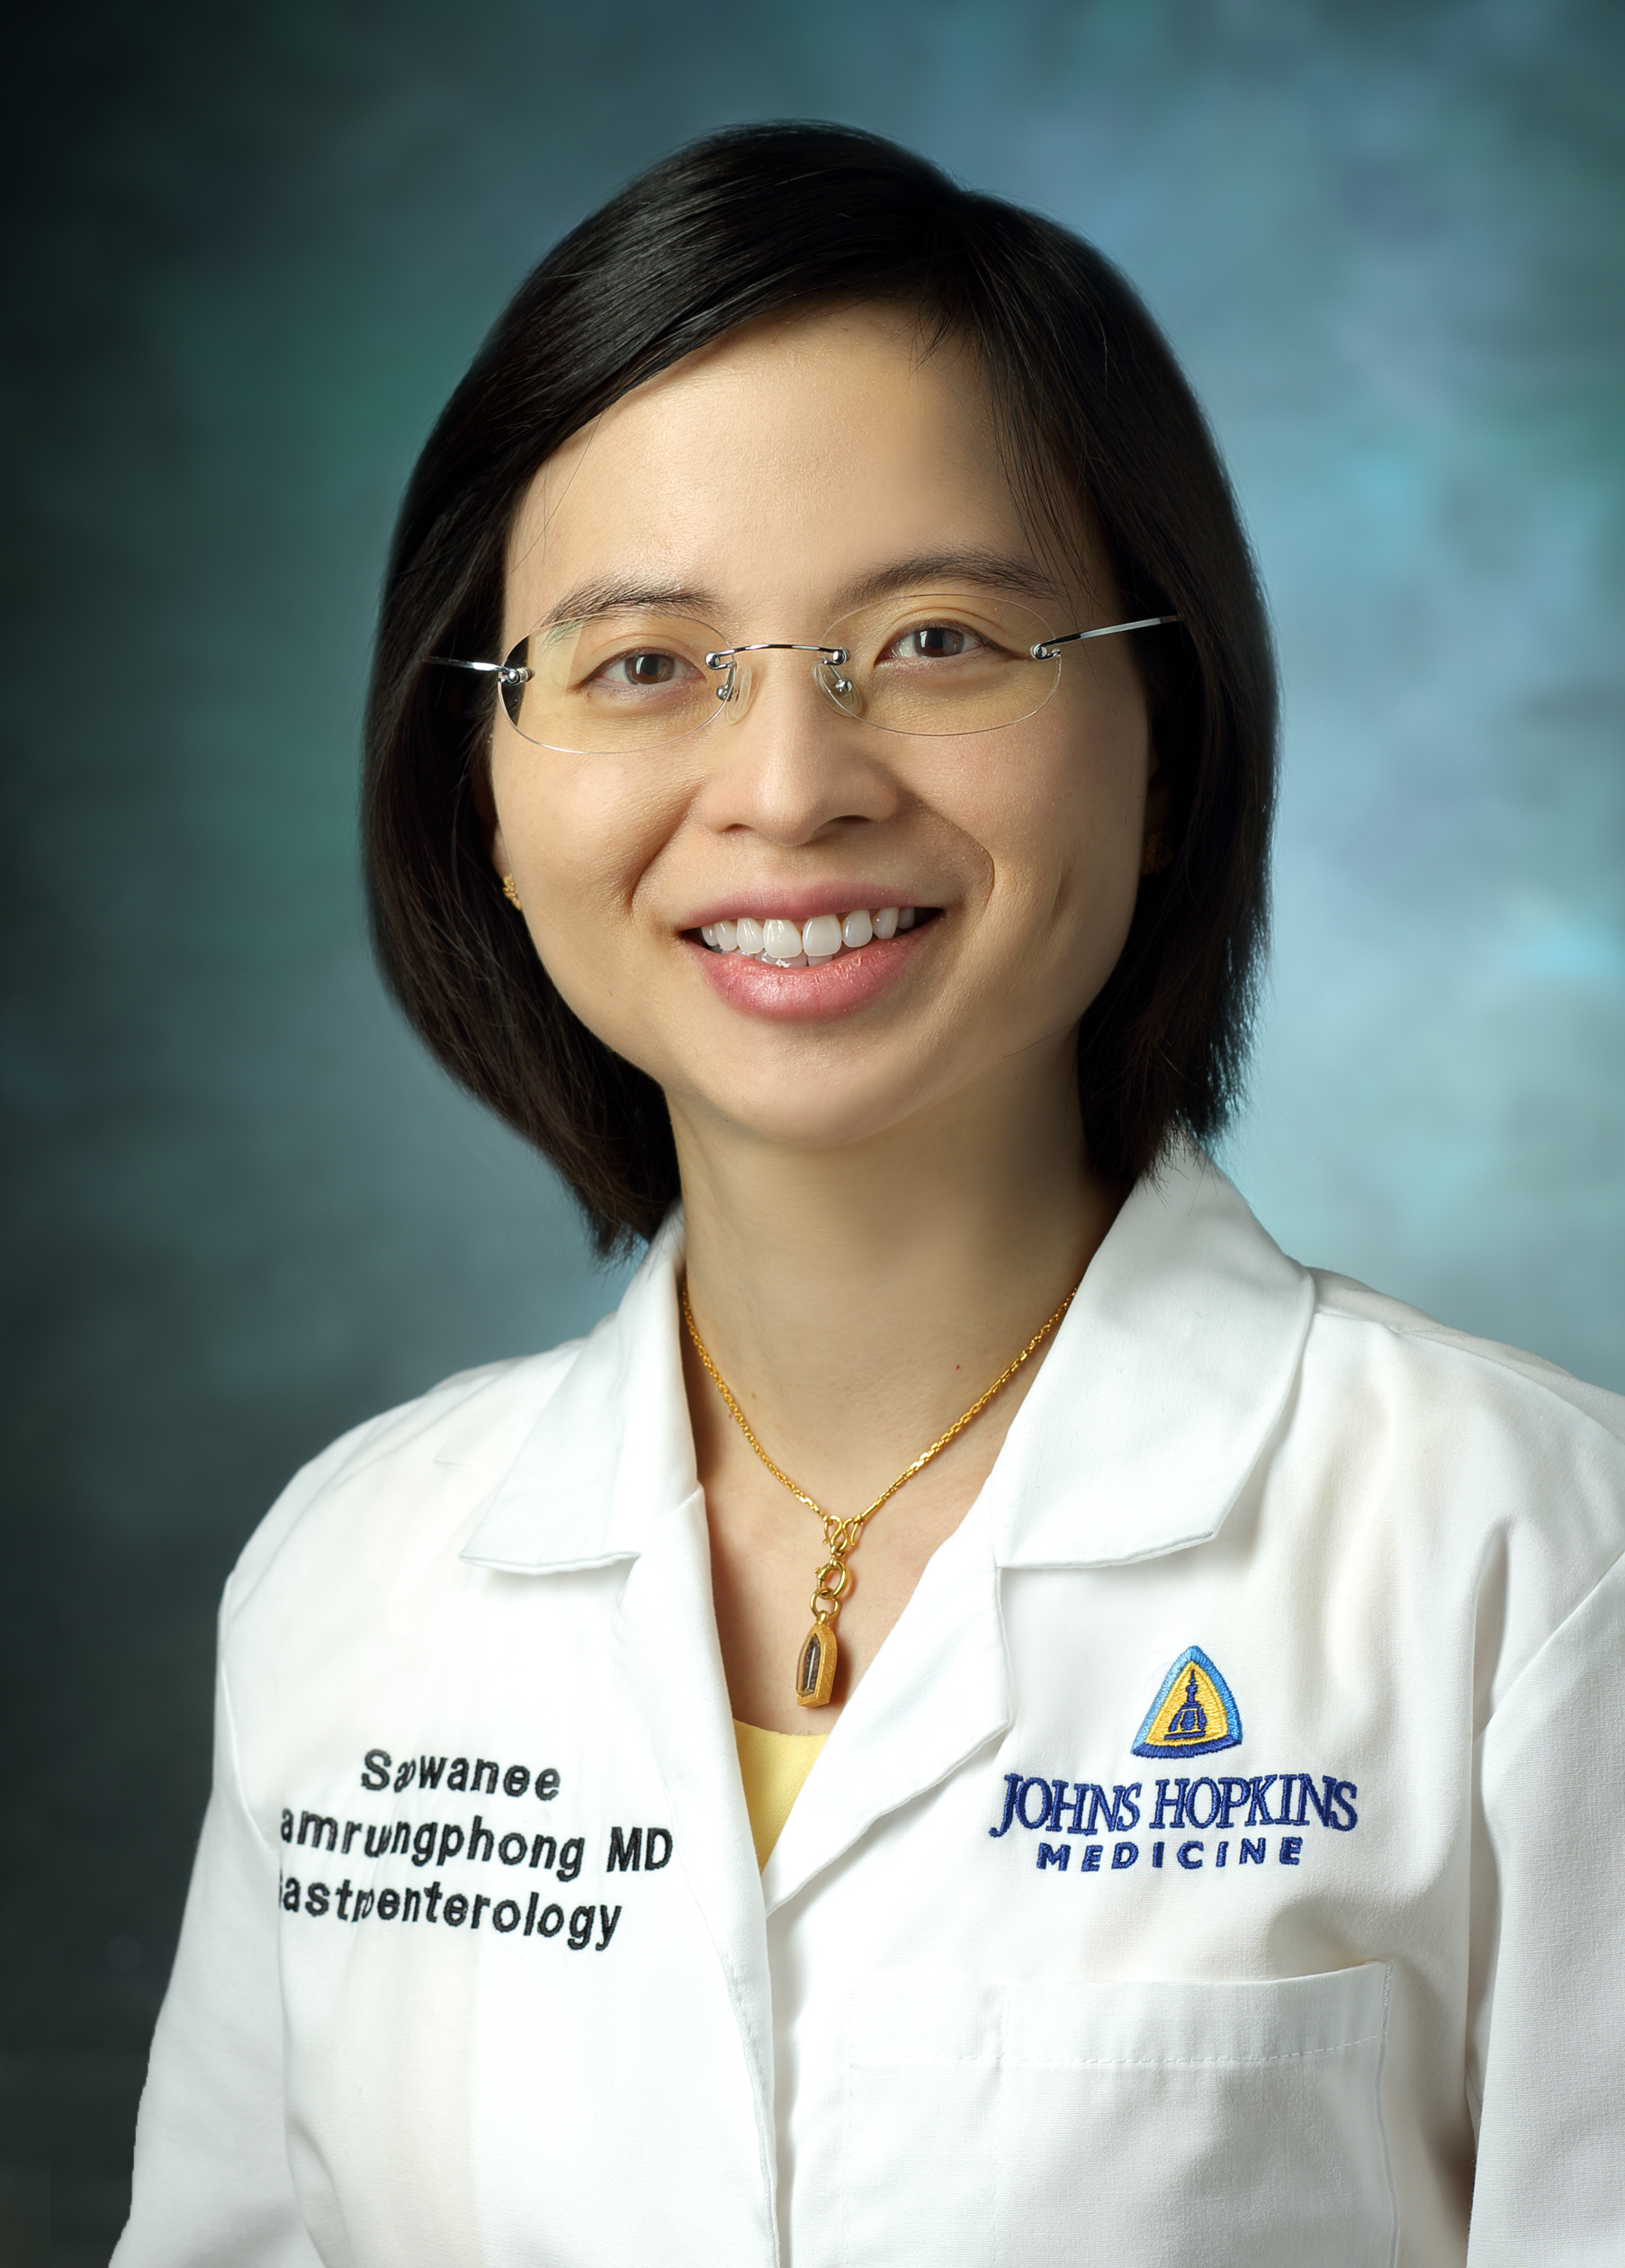 Dr. Saowanee Ngamruengphong in medical white coat and glasses